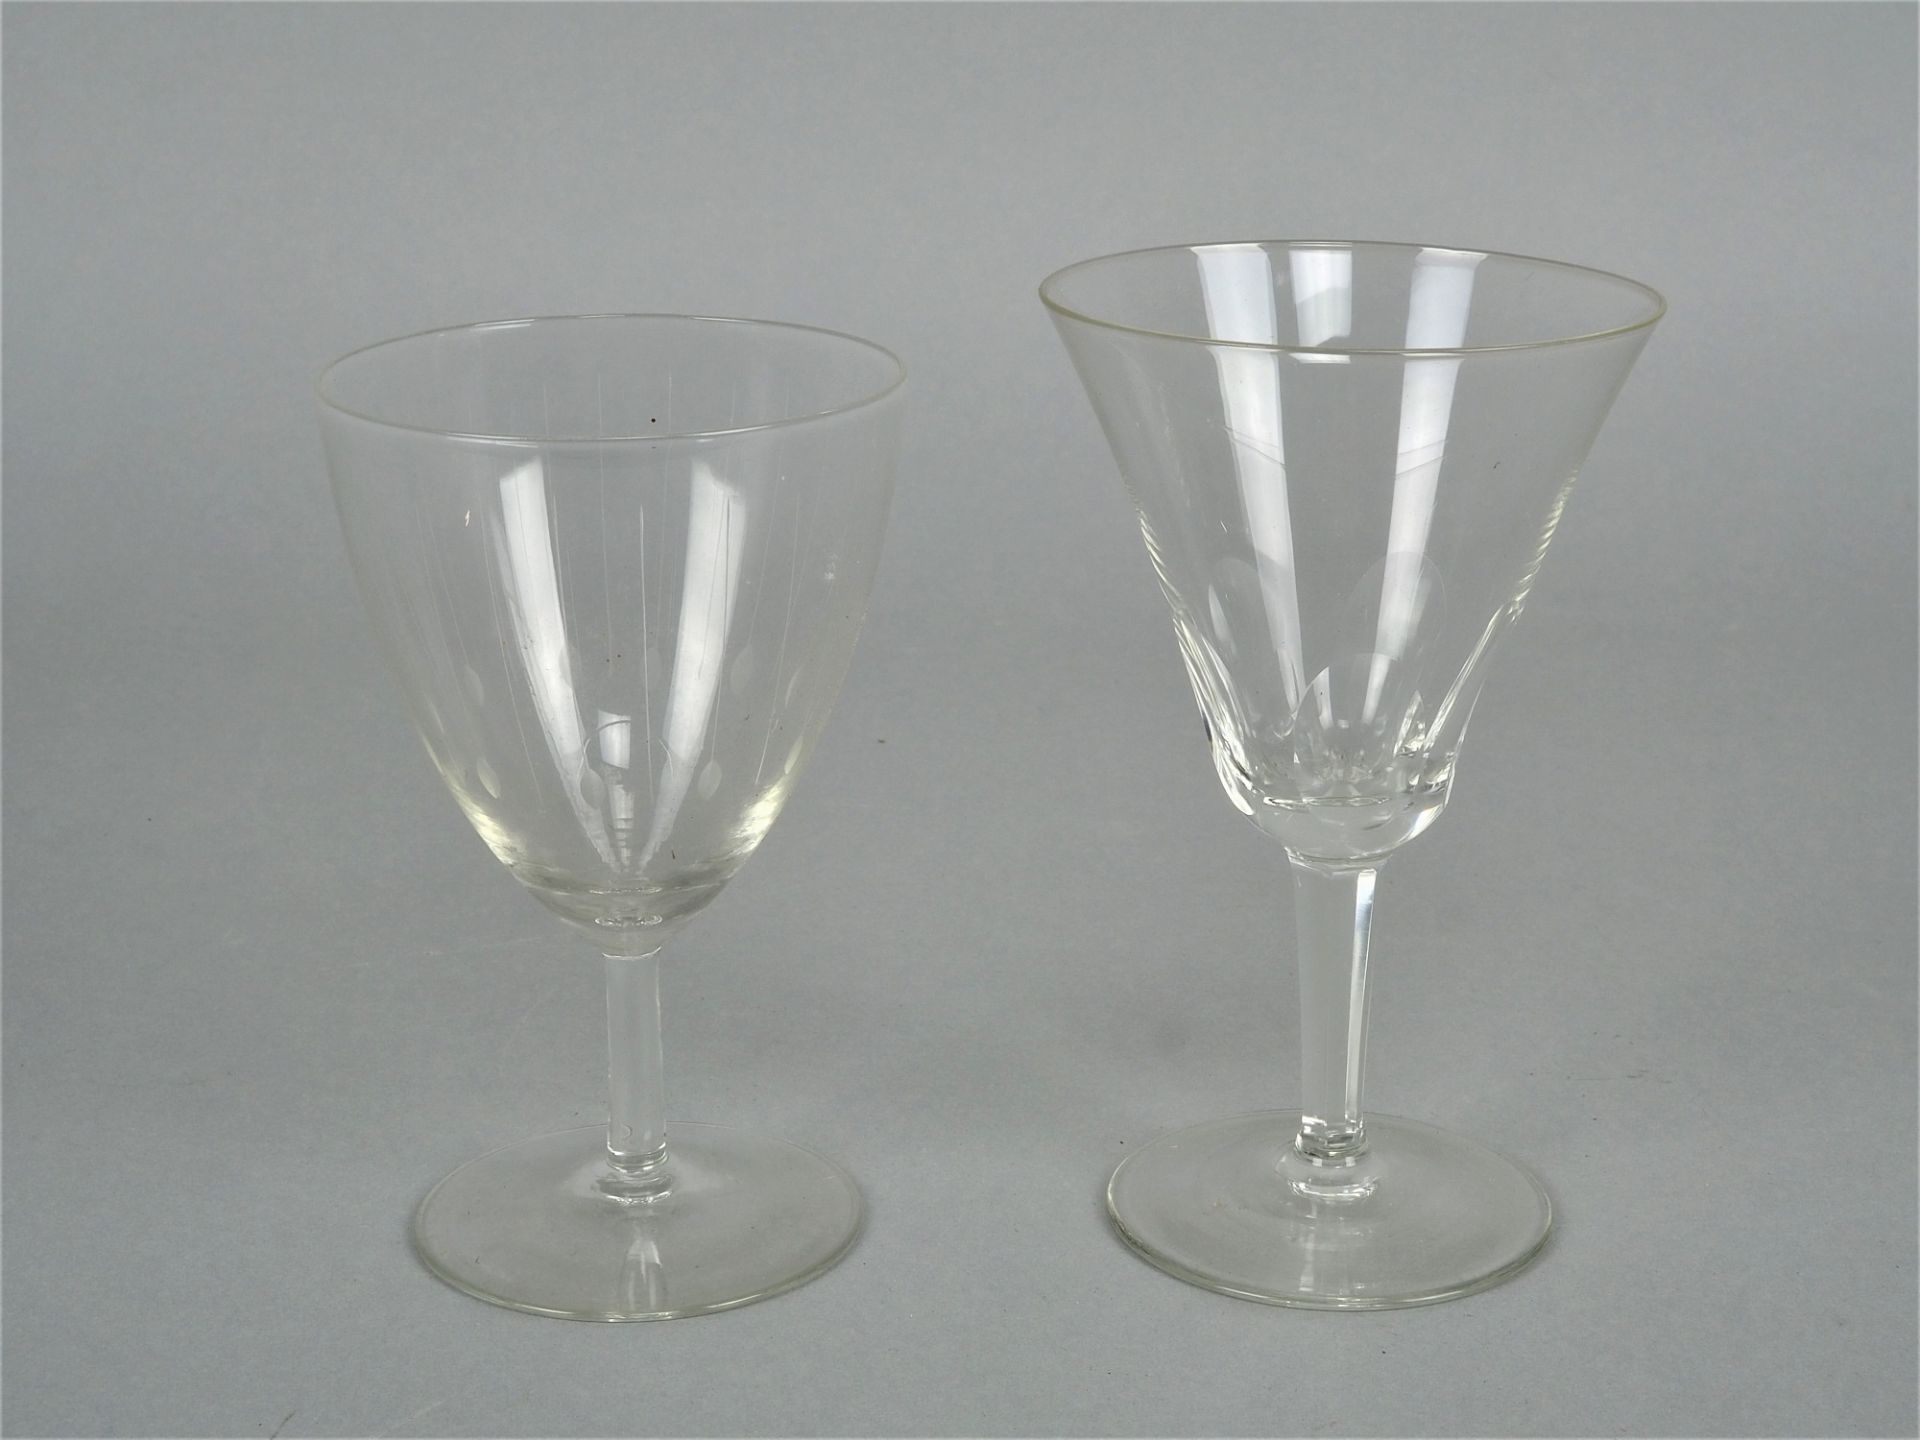 Set of wine glasses, around 1920. - Image 2 of 2